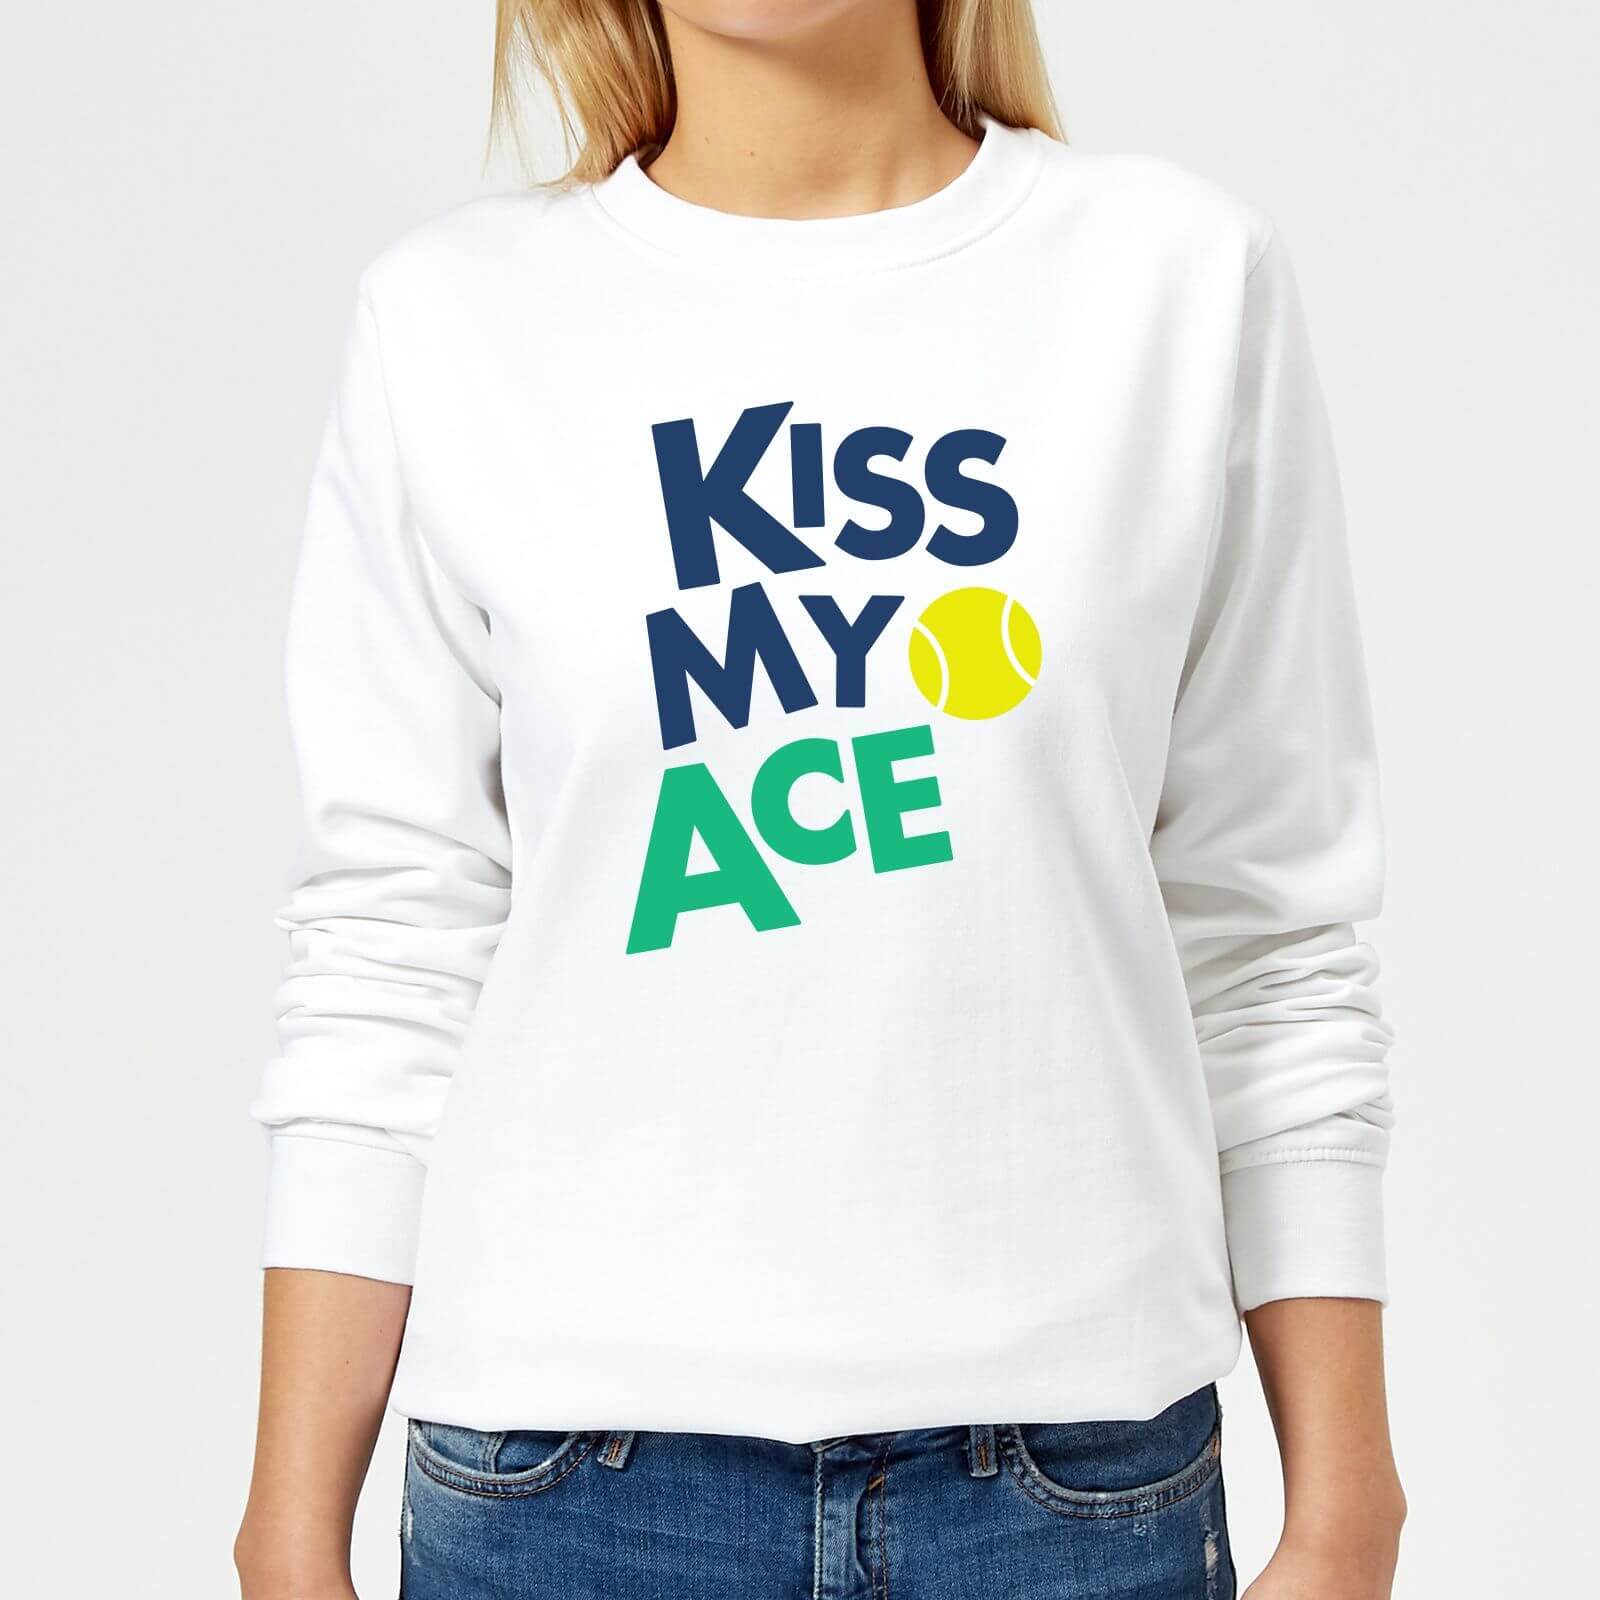 Kiss my Ace Women's Sweatshirt - White - L - White